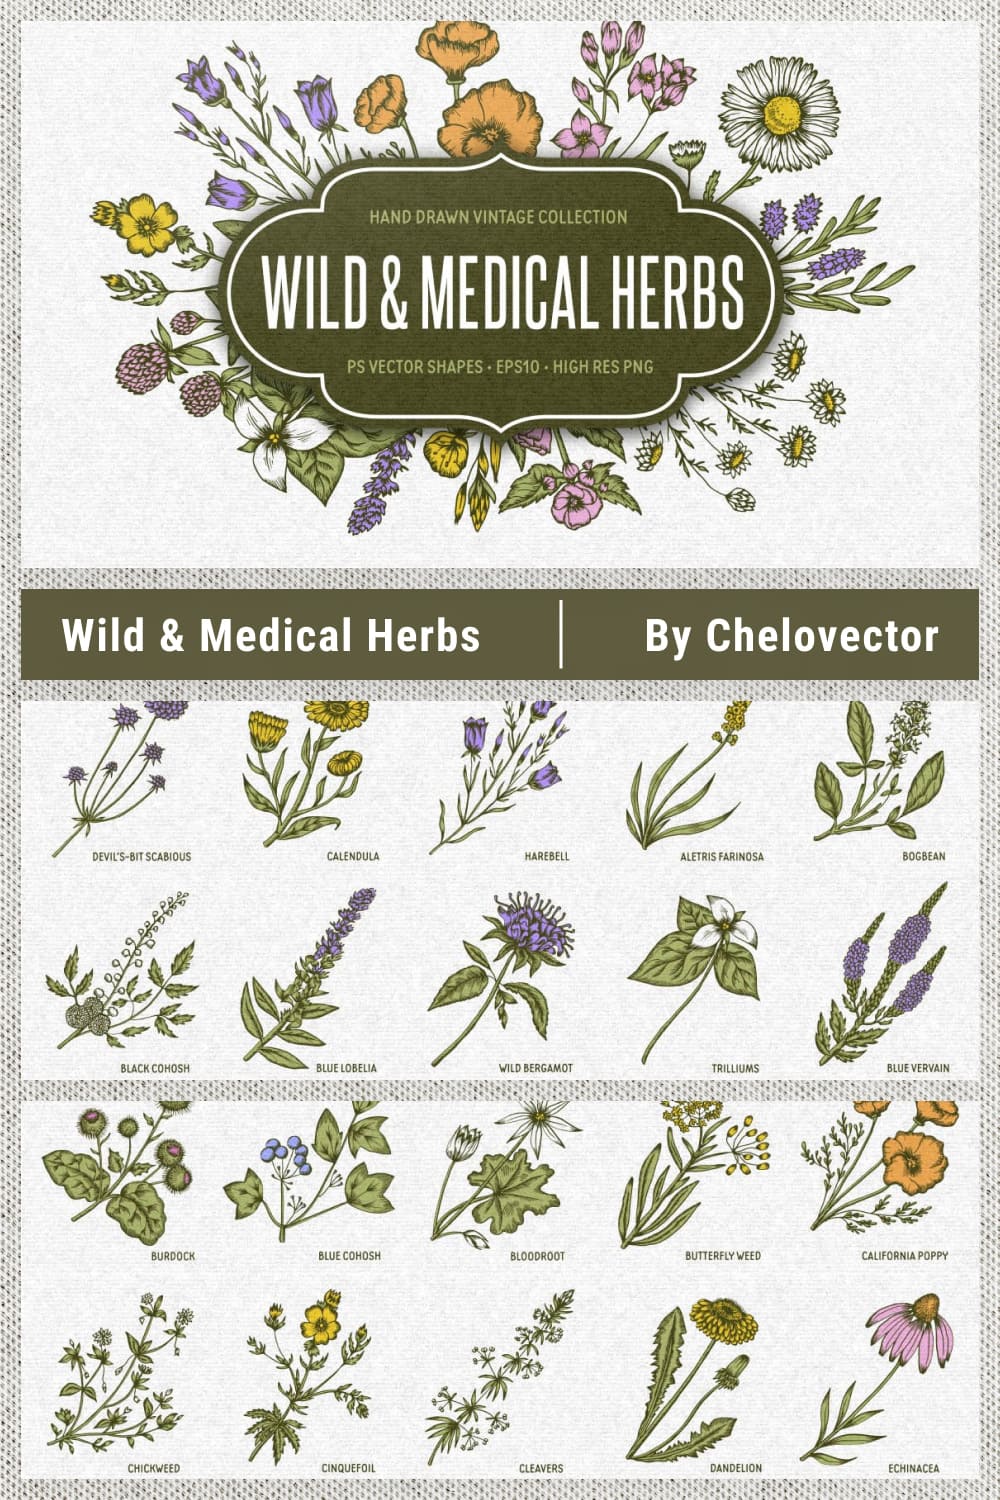 wild medical herbs pinterest image.